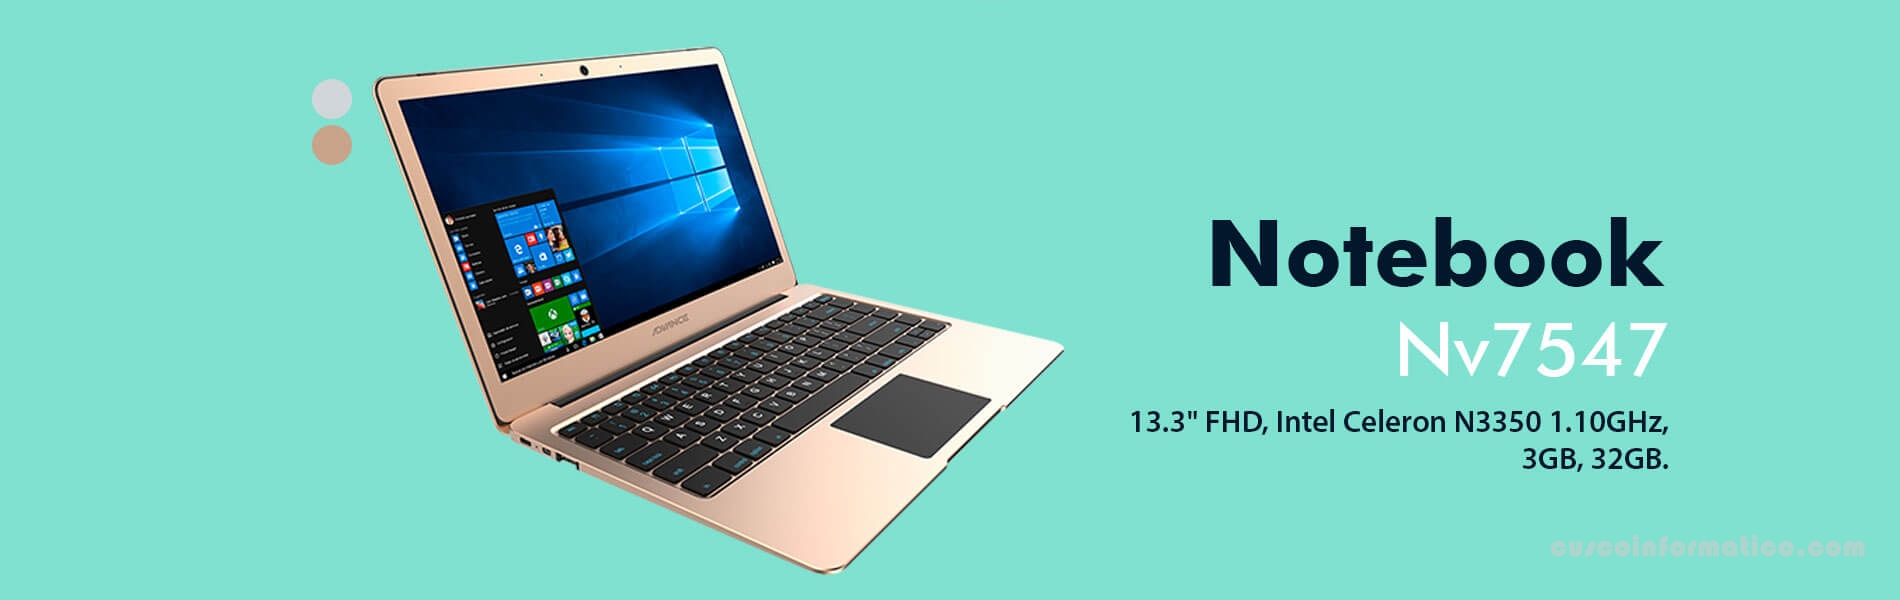 Laptop Advance NV7547, 13.3" FHD, Intel Celeron N3350 1.10GHz, 3GB, 32GB